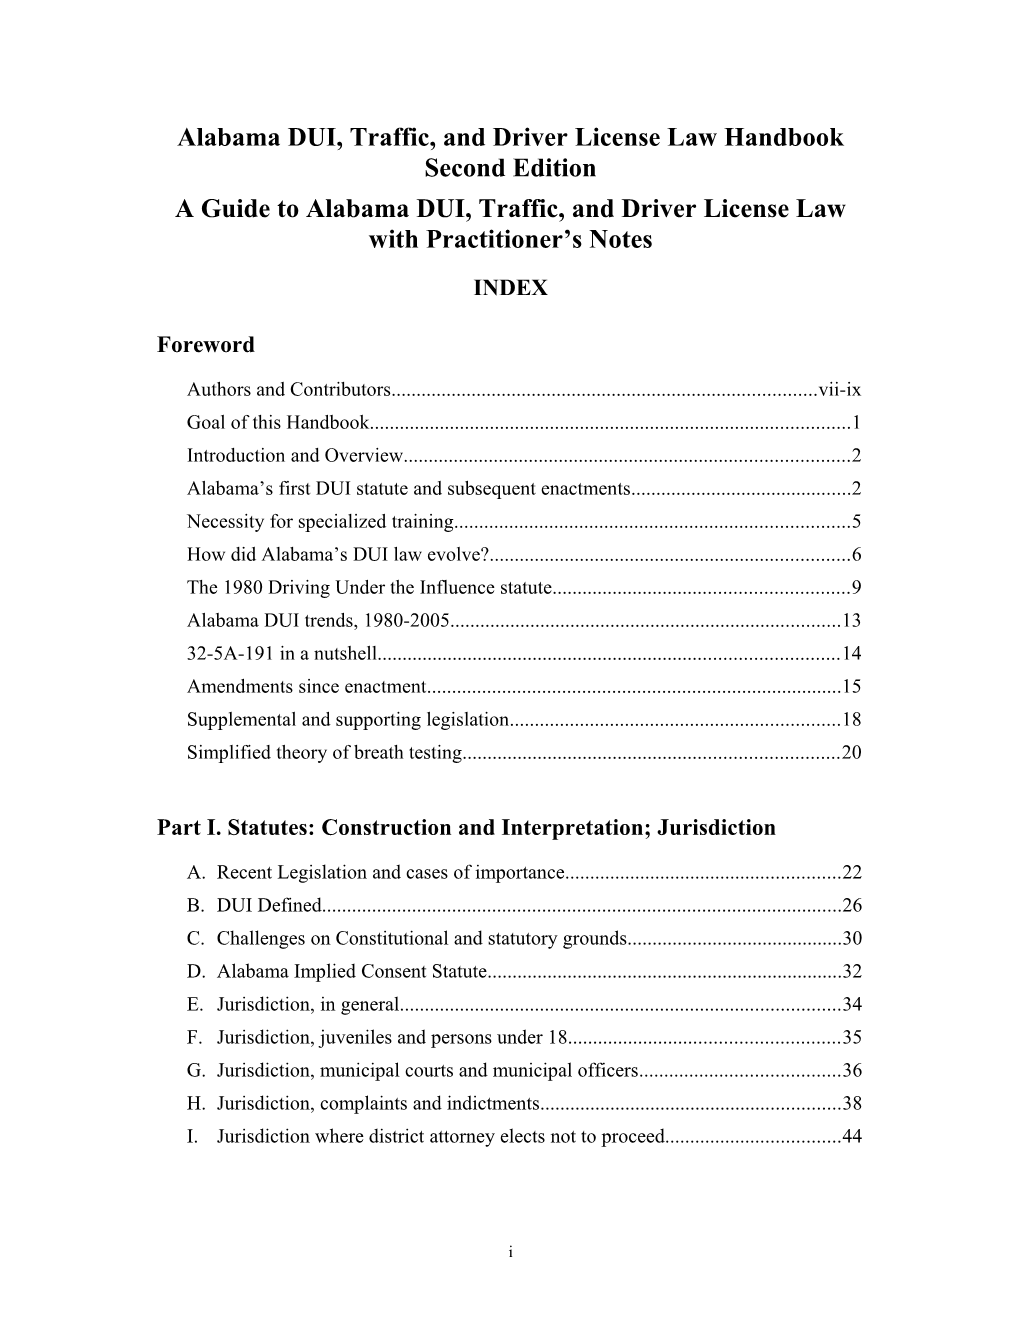 Alabama DUI and Traffic Law Summary